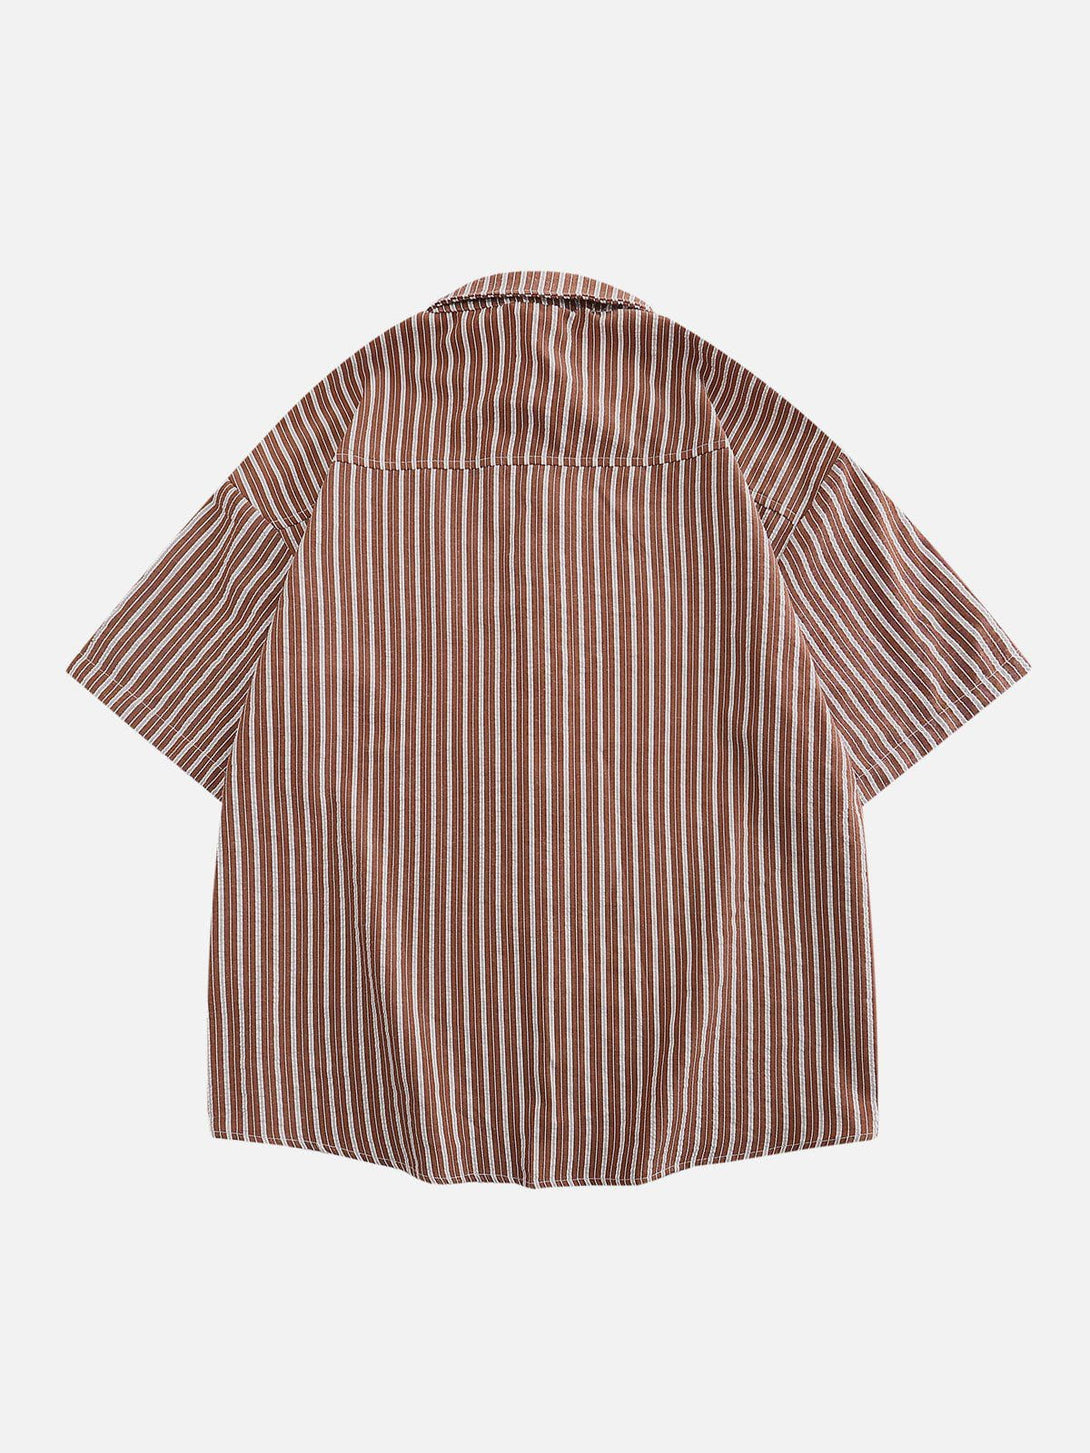 Majesda® - Small Flower Pendant Stripes Short Sleeve Shirt outfit ideas streetwear fashion